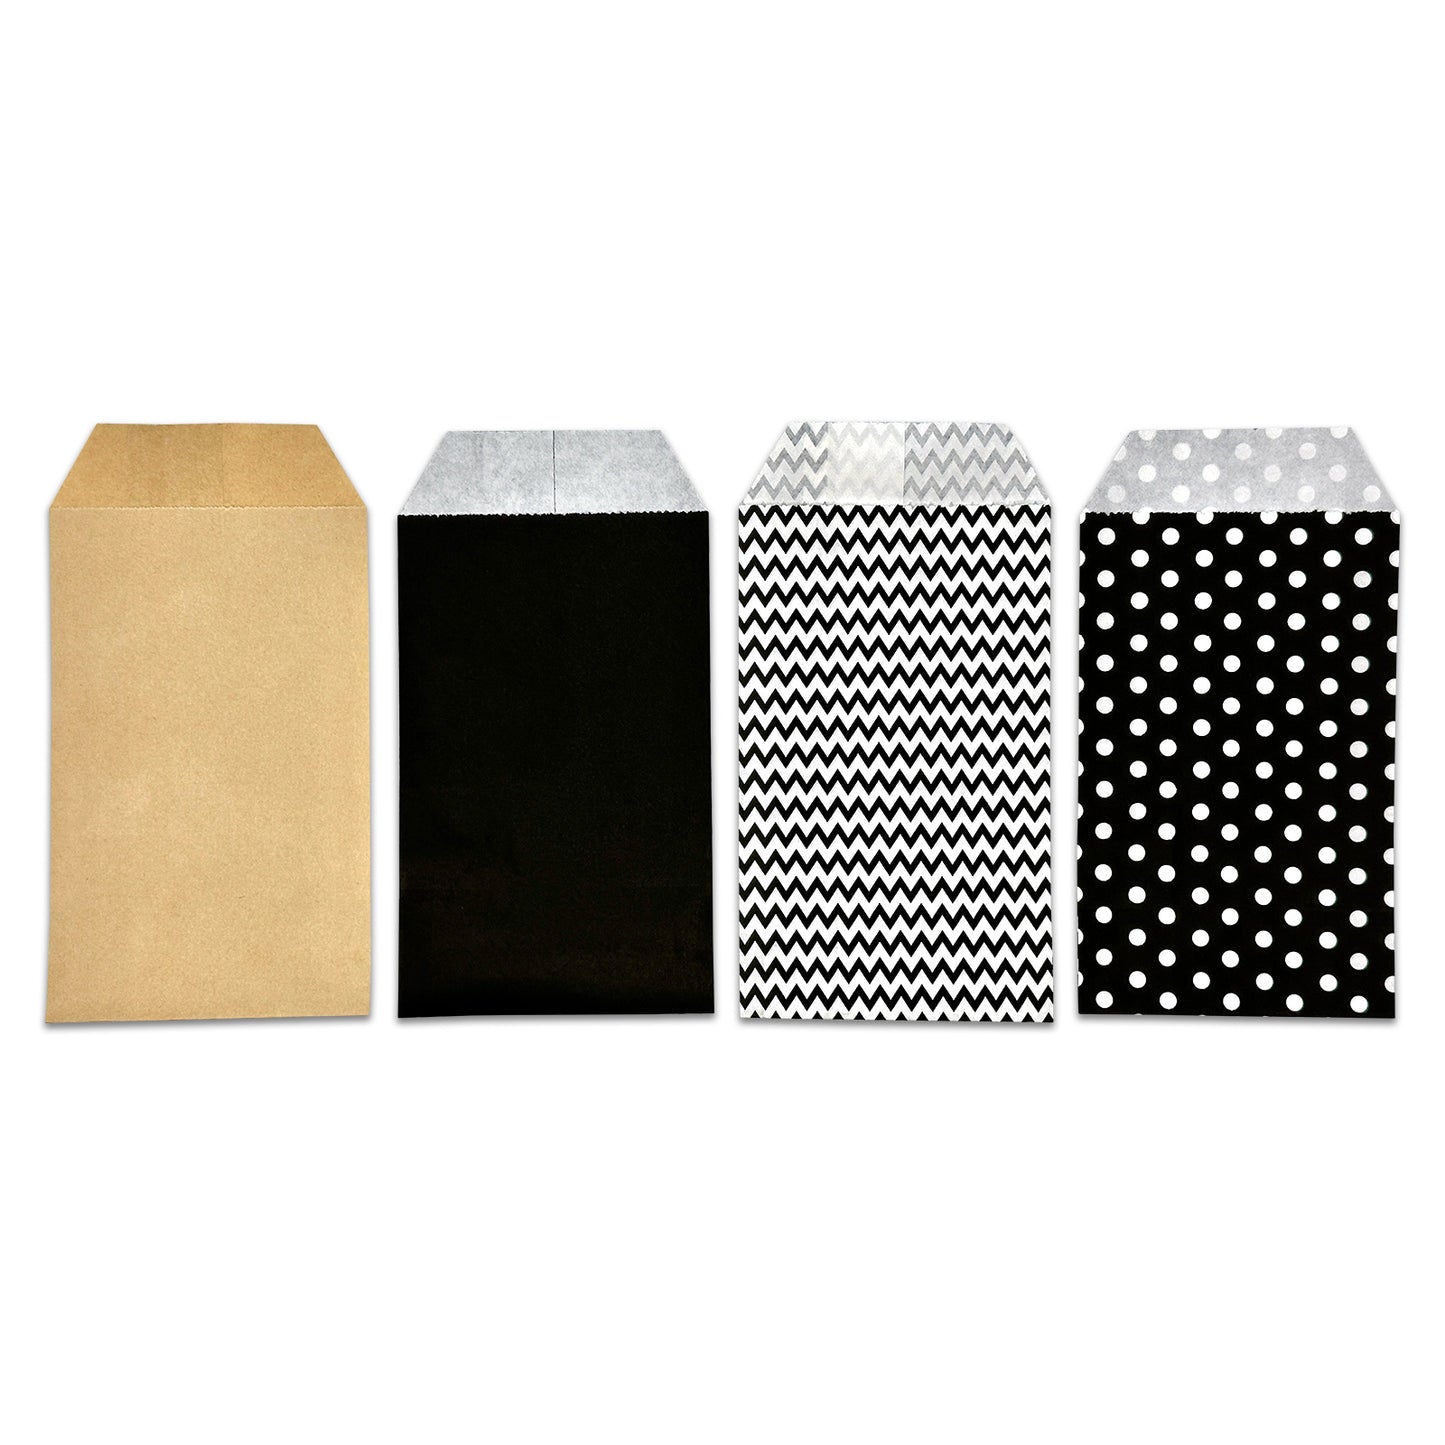 3" x 5" Black and White Polka Dot Flat Paper Gift Shopping Bags